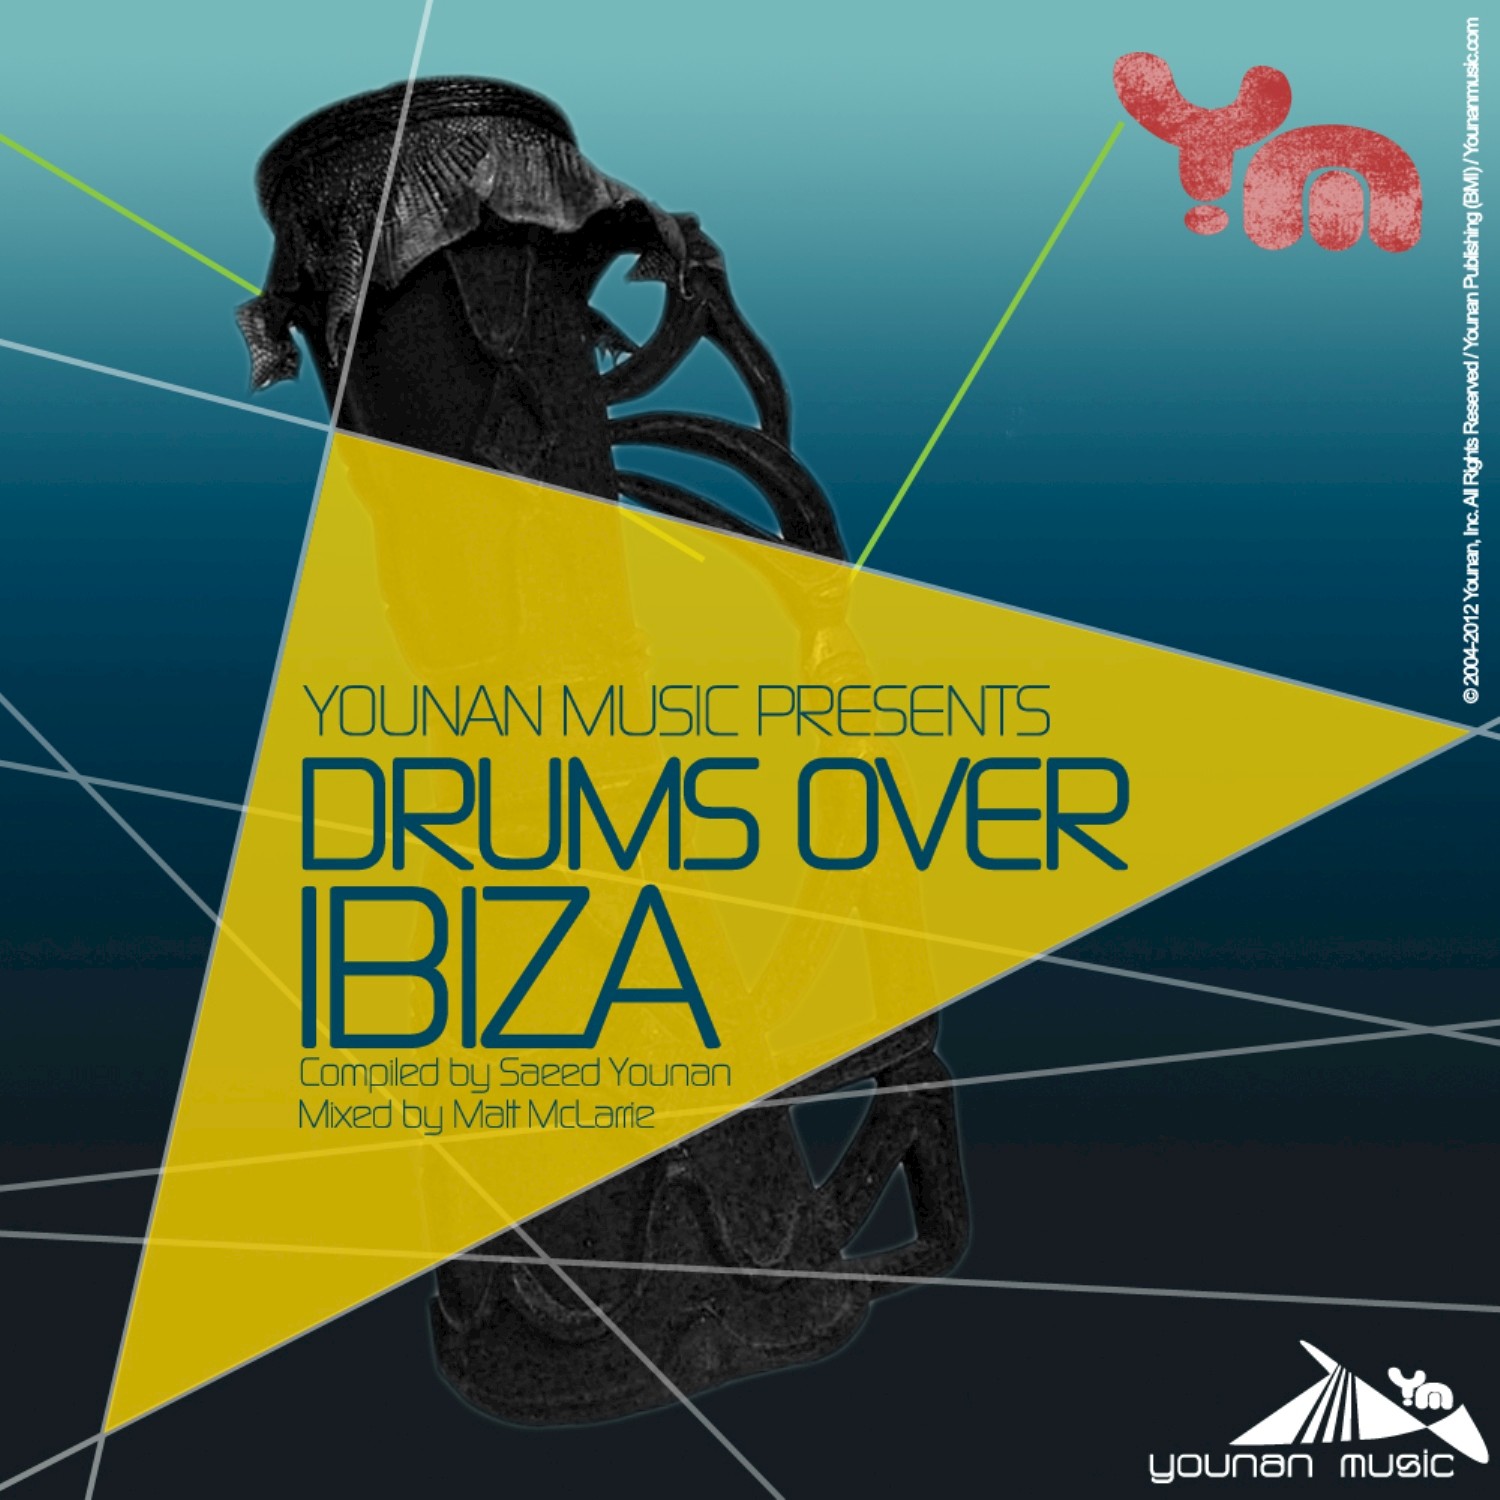 Drums Over Ibiza Mixed by Matt McLarrie